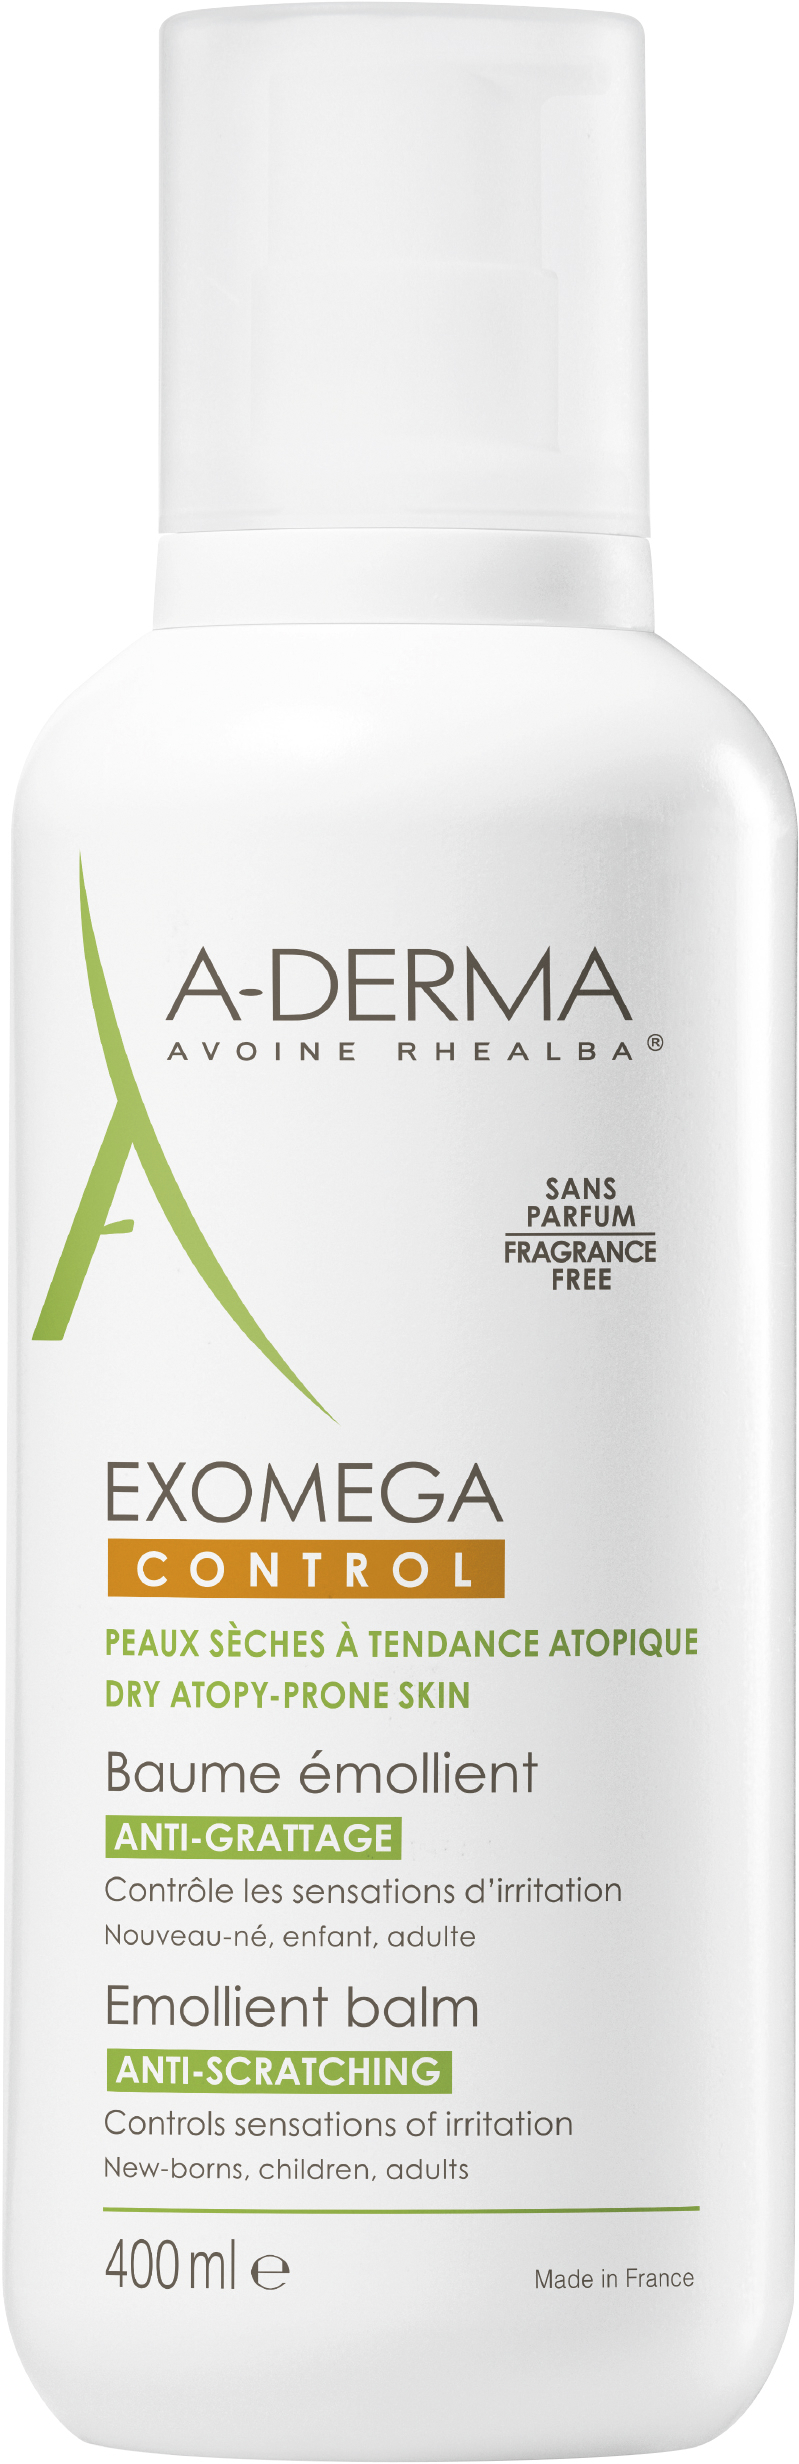 A-Derma Exomega Control Balm 400 ml